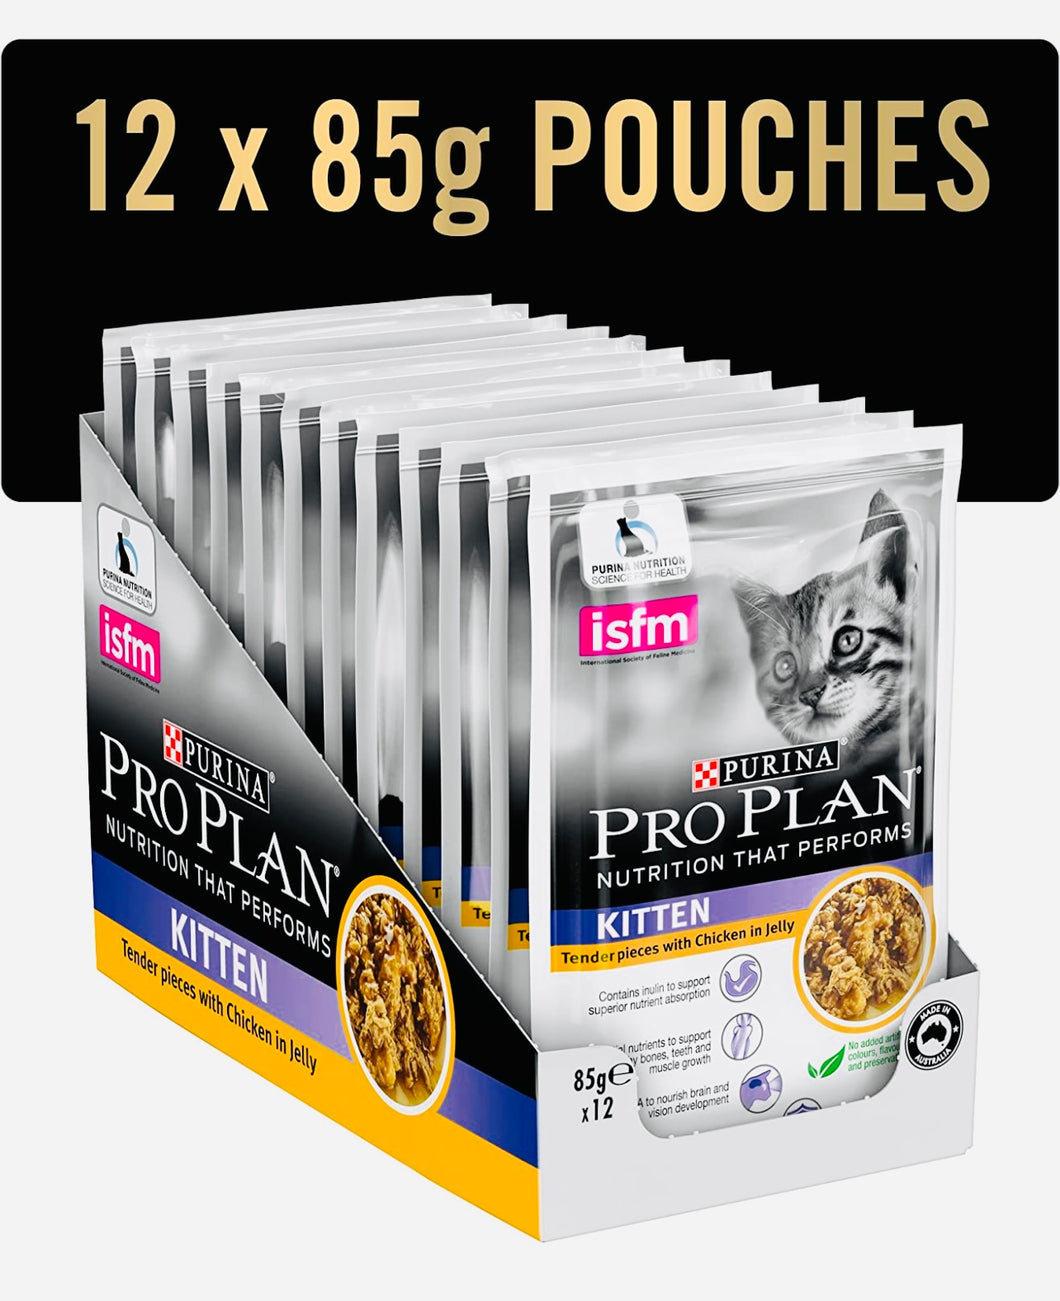 Purina Pro plan chicken in jelly wet kitten food 12 pouch * 85gm